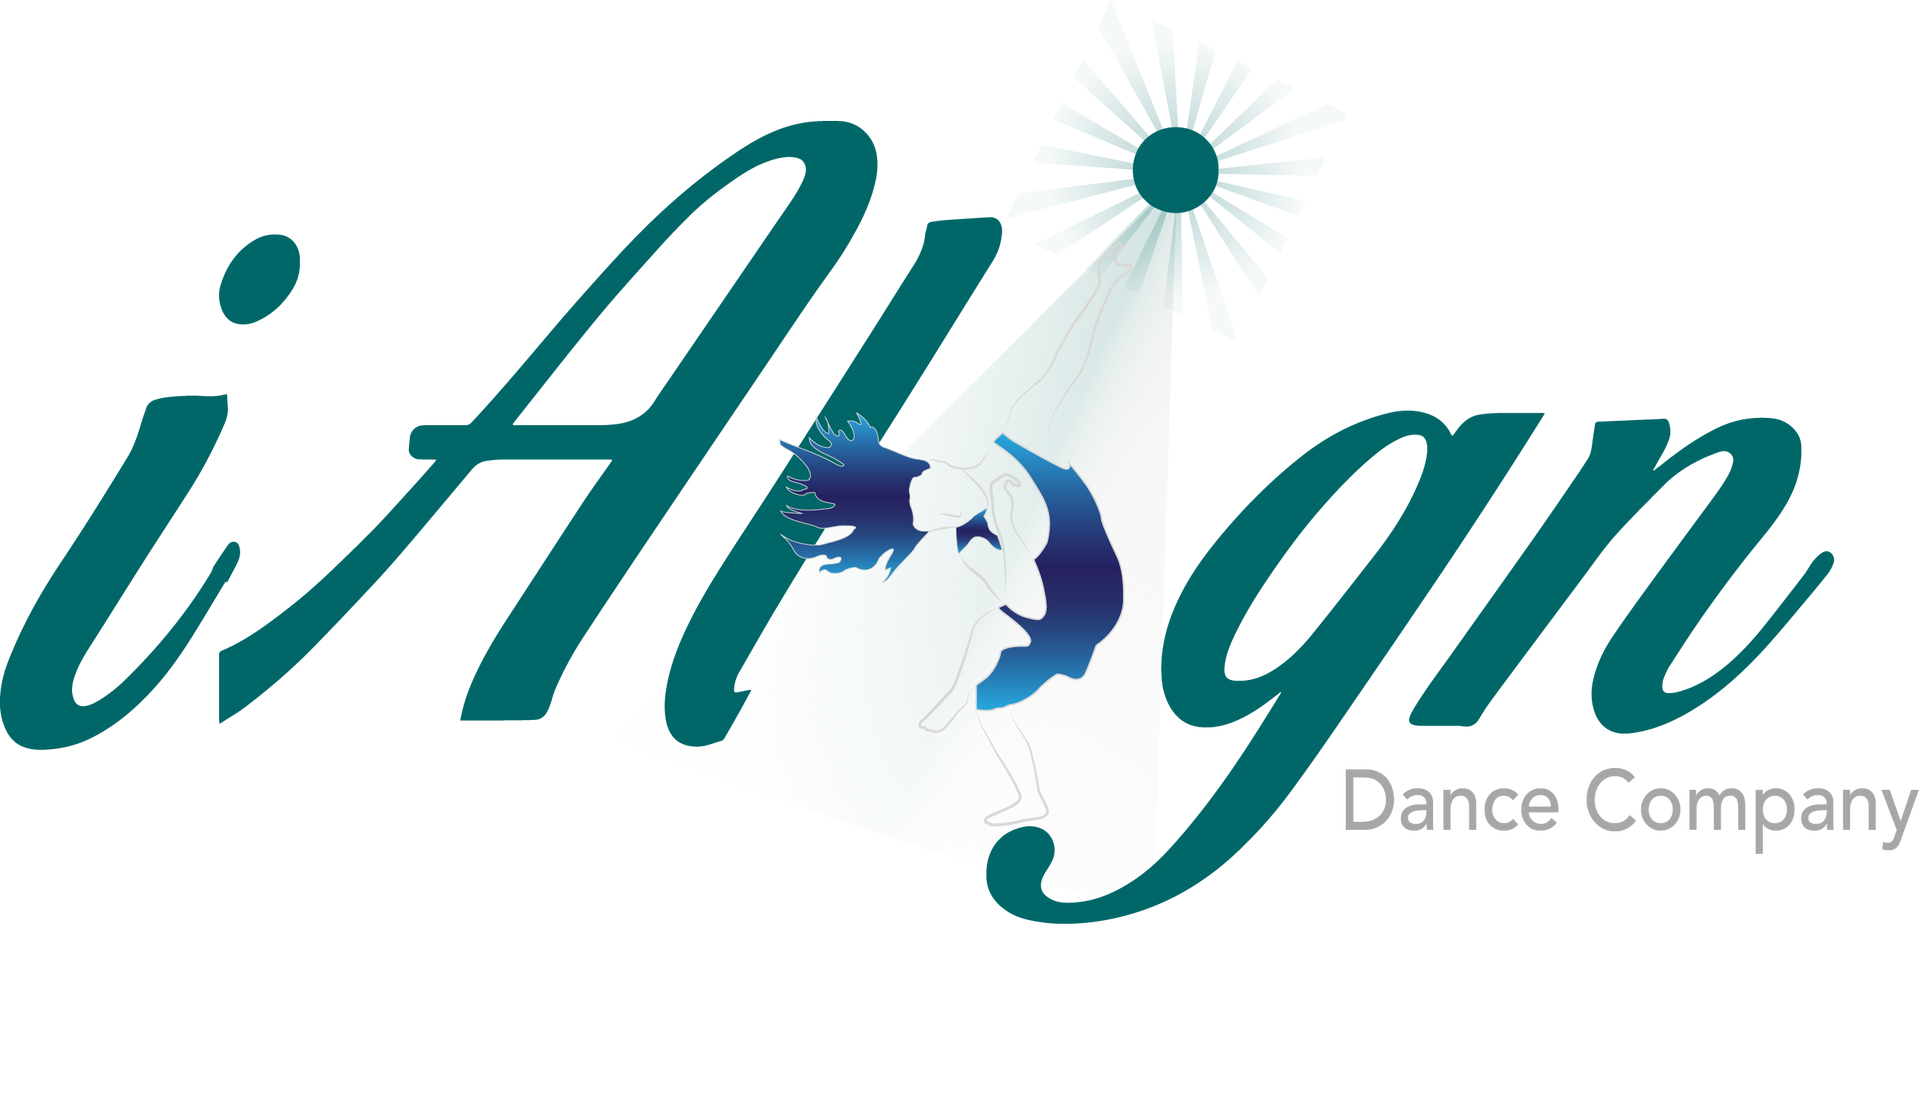 iAlign Dance Company